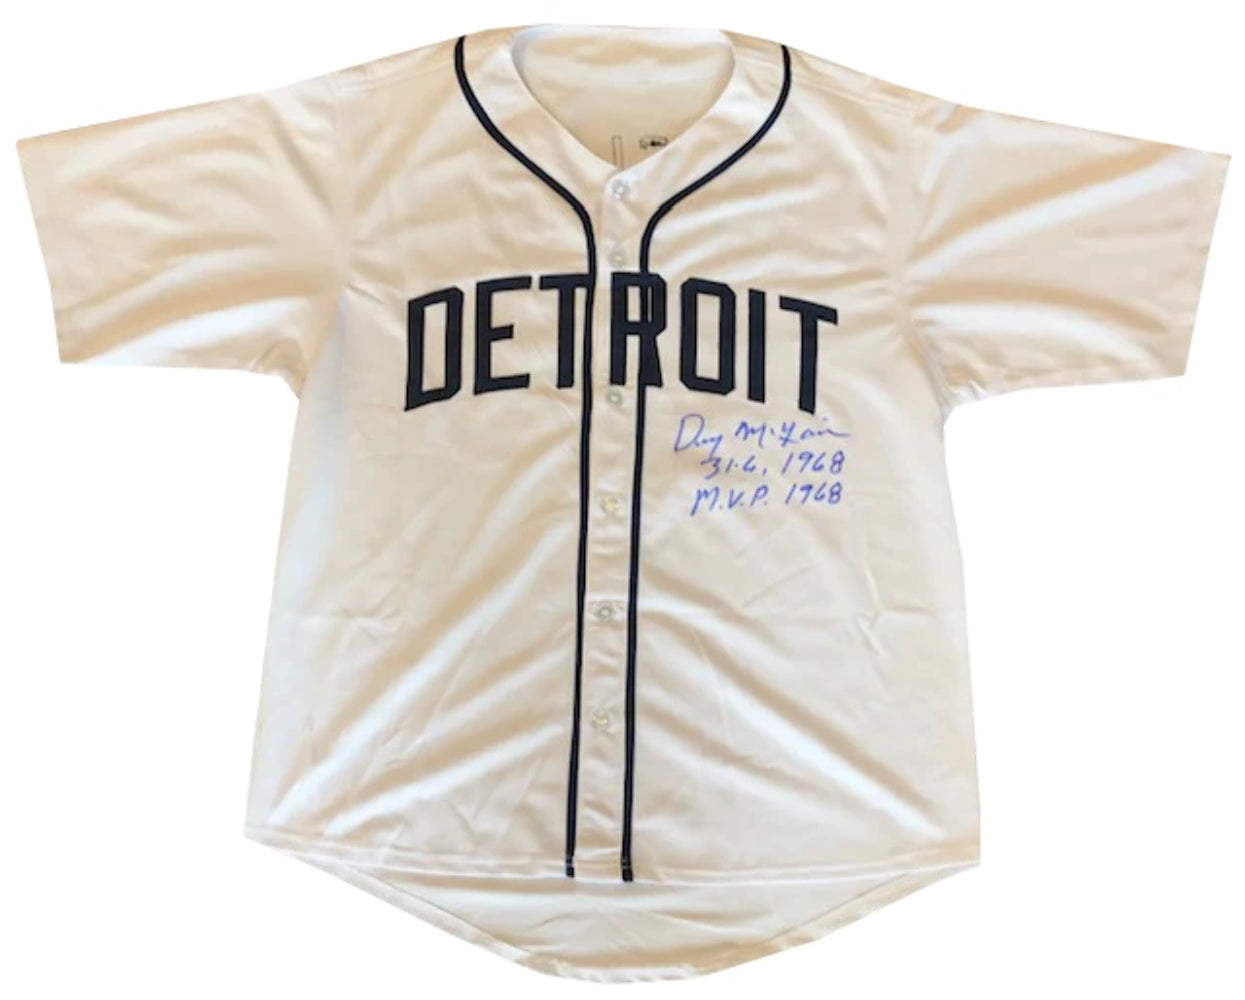 Denny McLain Autographed Detroit Tigers Nike Jersey w/ 31-6, 1968